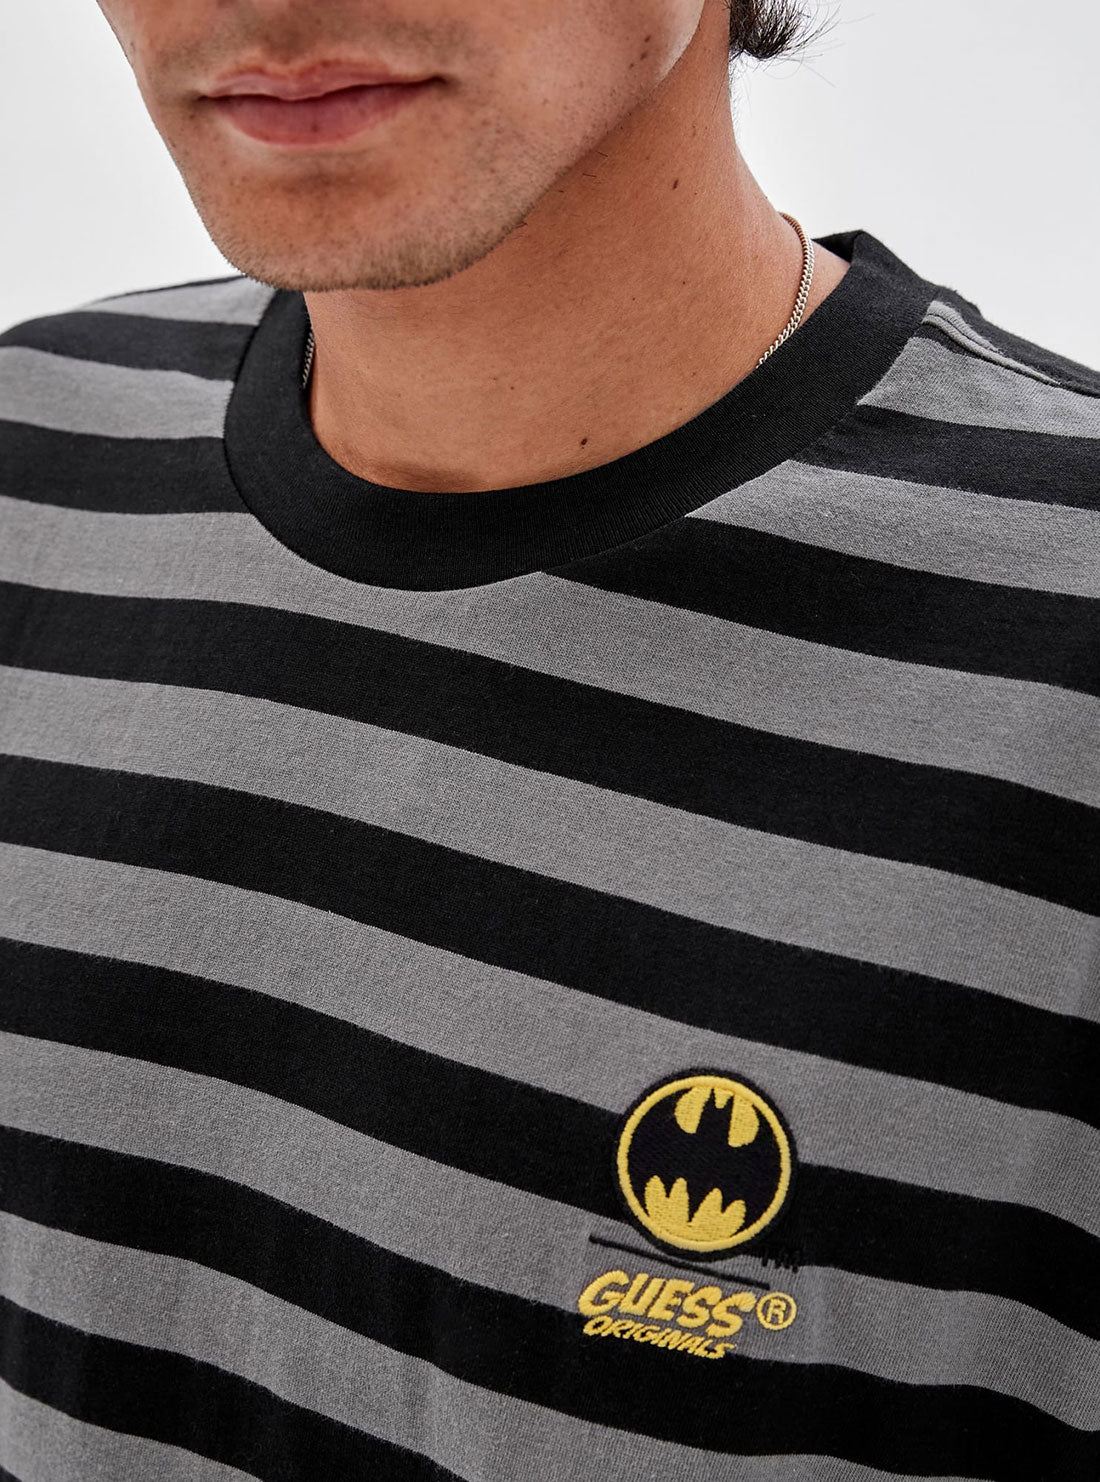 GUESS Men's Guess Originals x Batman Black Stripe T-Shirt M2BI13K9XF3 Detail View